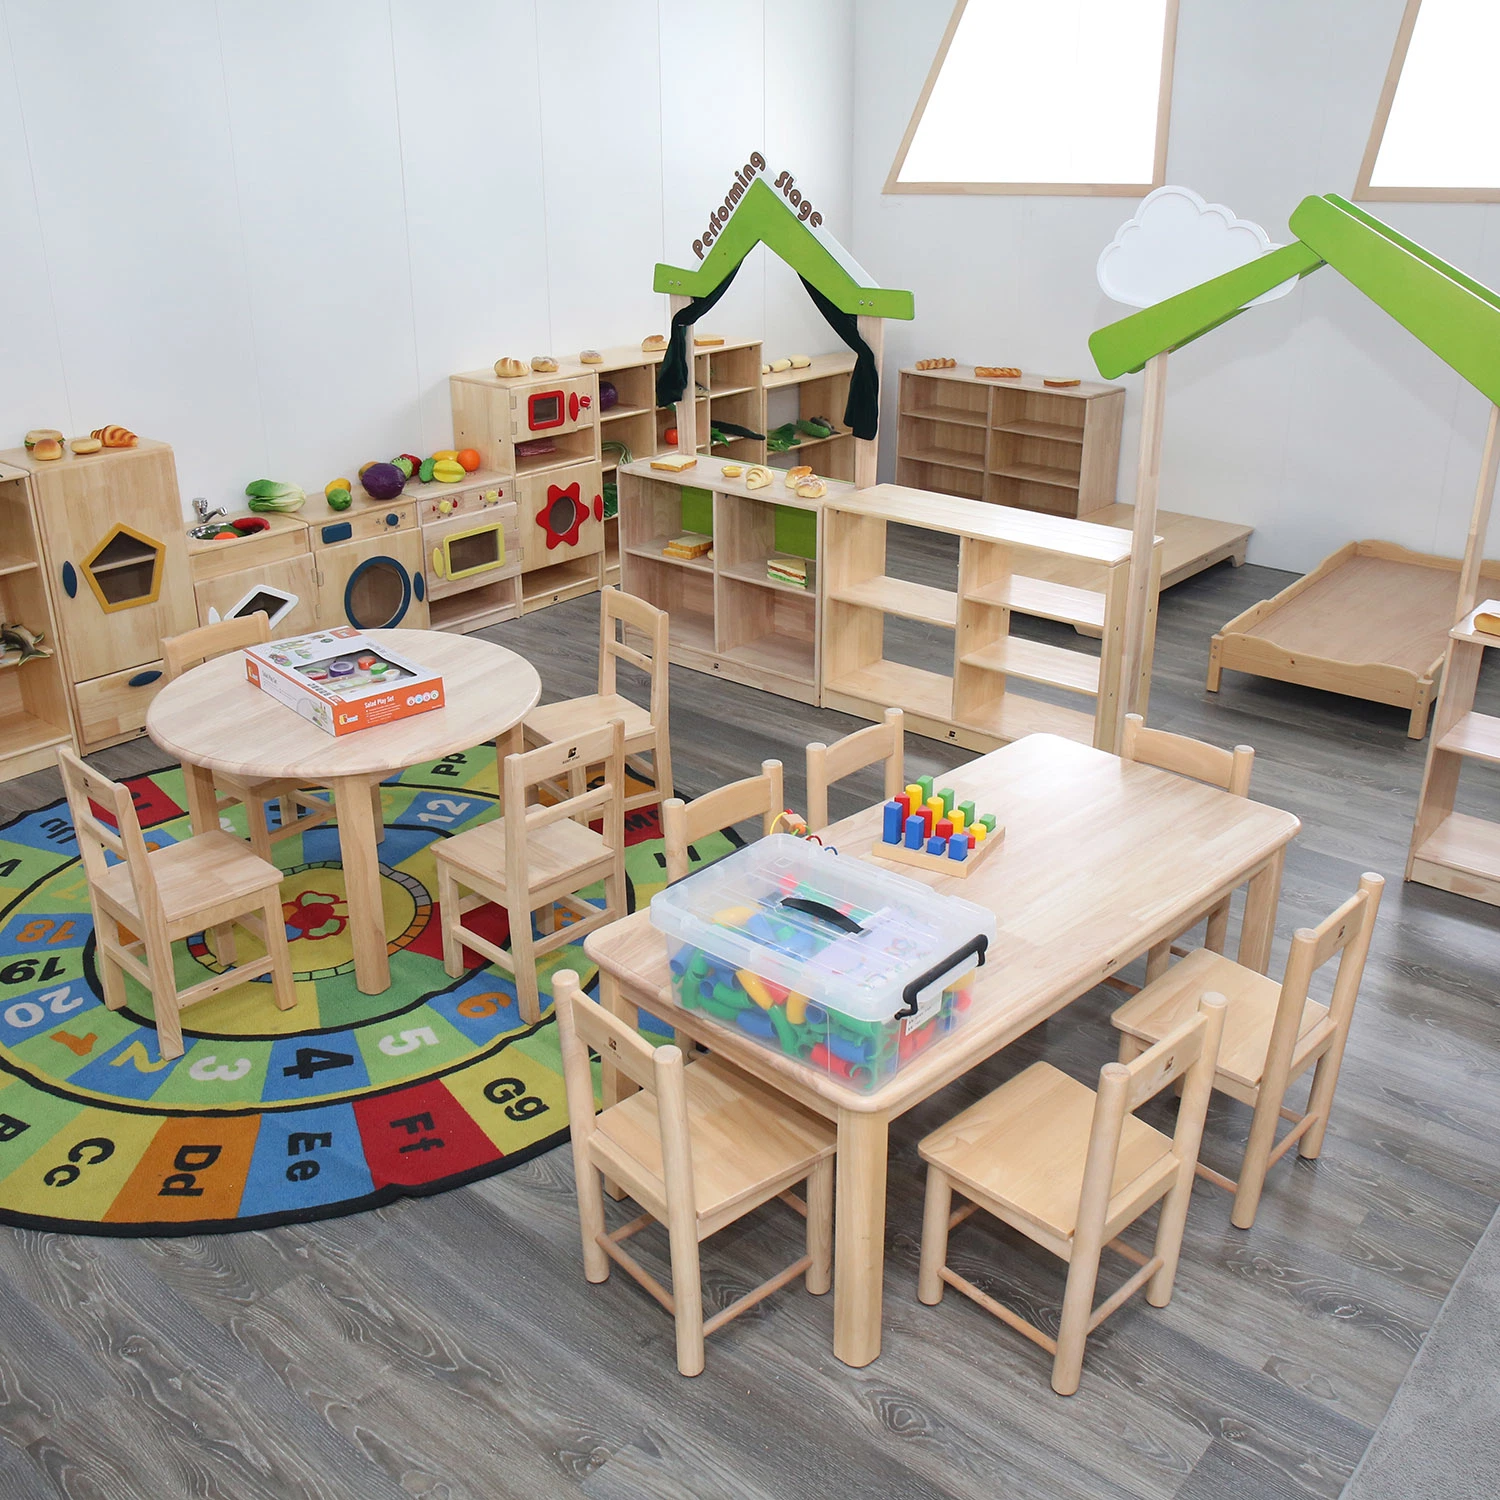 Kids Wood Chair, Students Table Chair, Child Desk Chair, School Classroom Chair, Baby Modern Furniture, Preschool and Nursery Chair, Home Furniture Chair